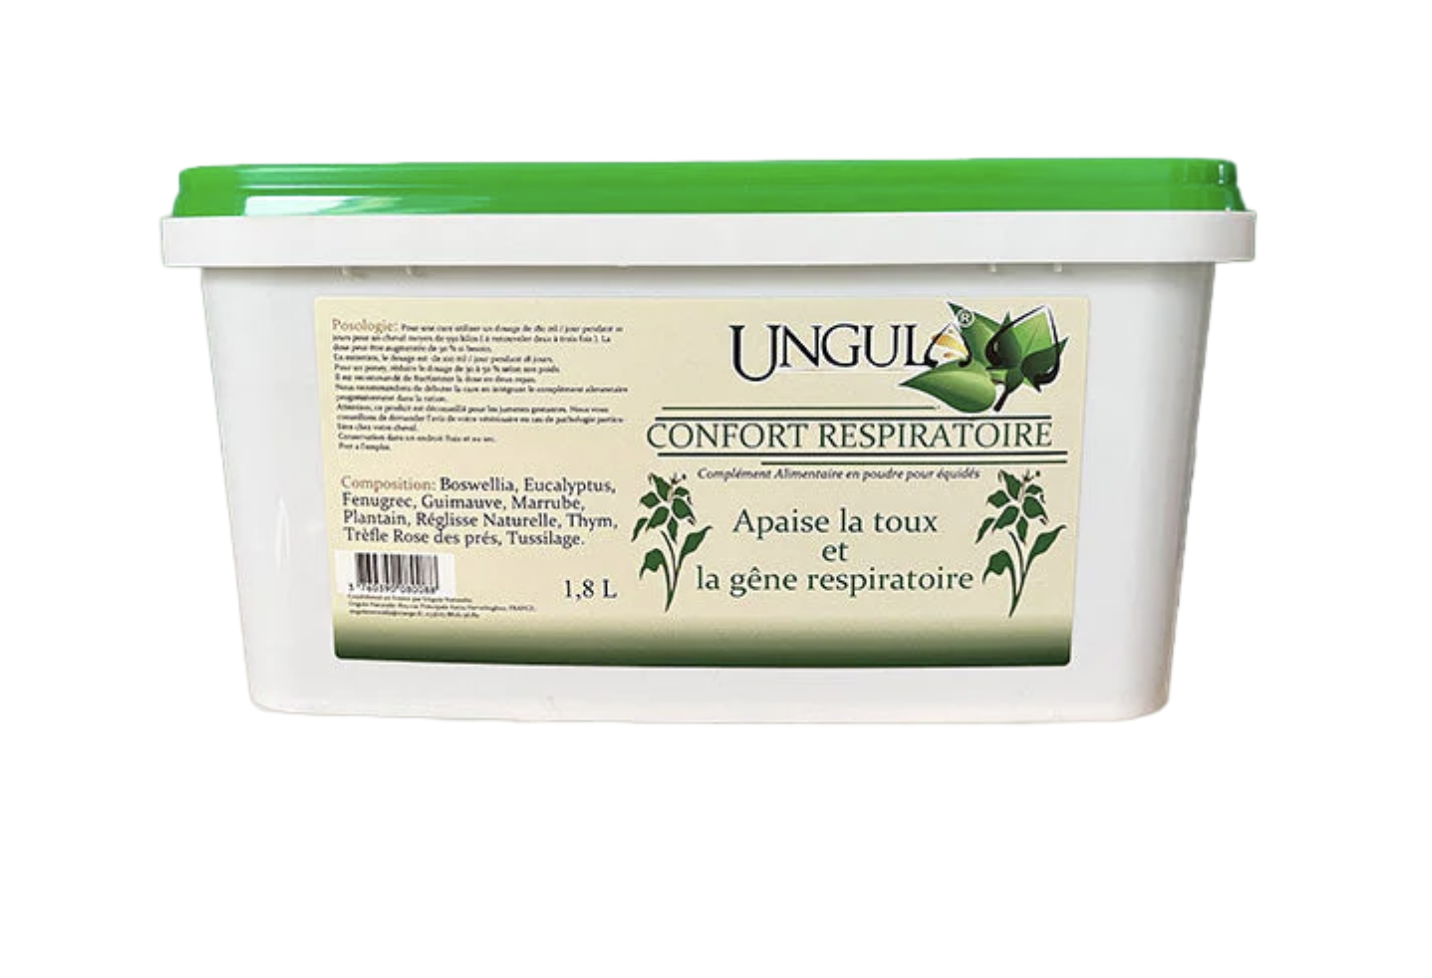 Confort respiratoire - Ungula 1,8L